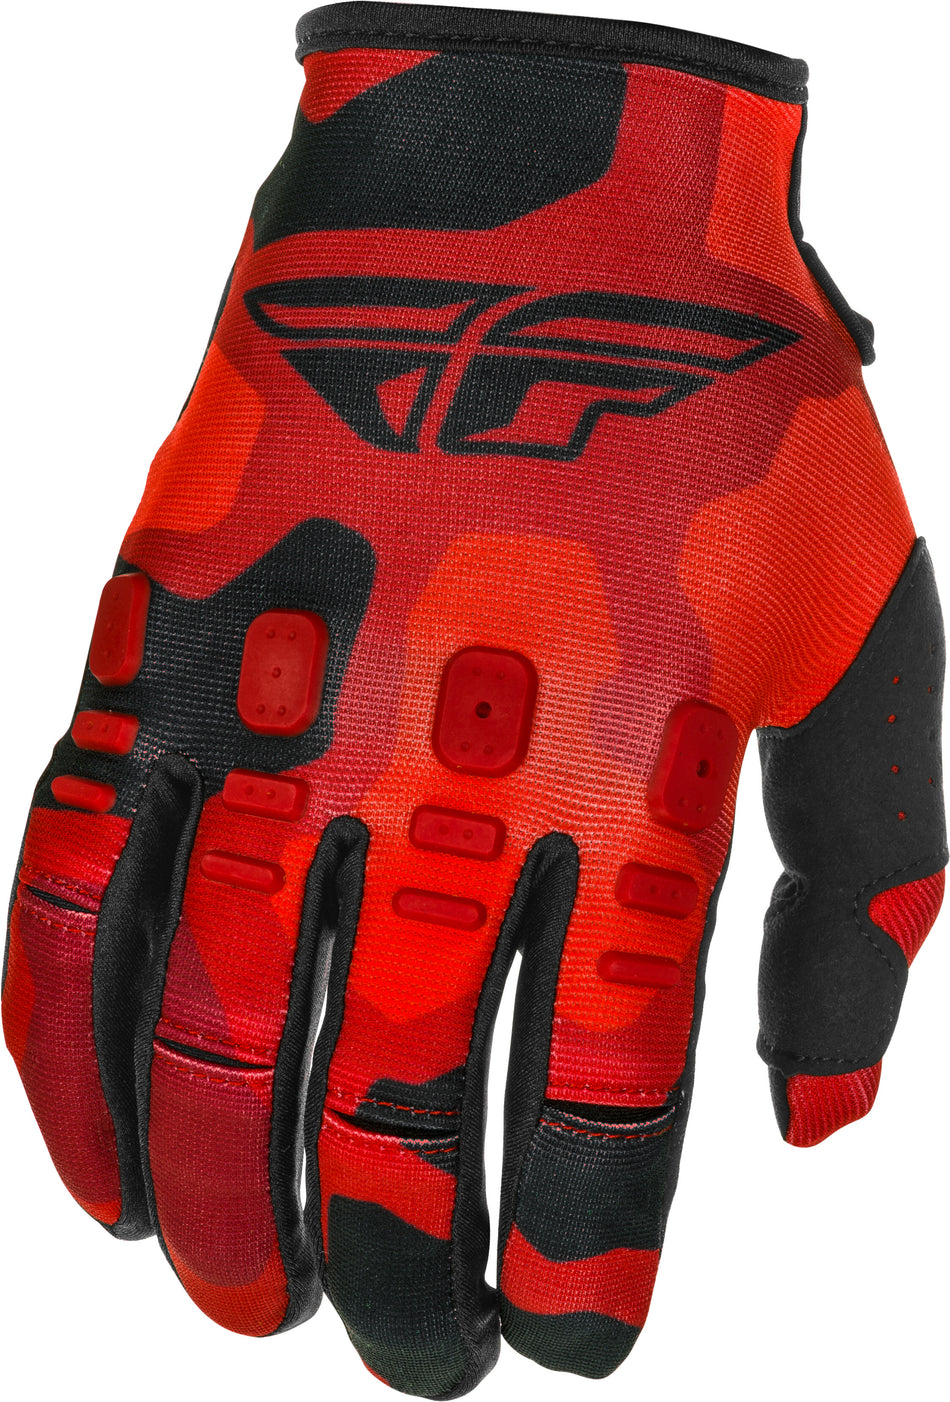 FLY RACING Kinetic K221 Gloves Red/Black Sz 12 374-51212